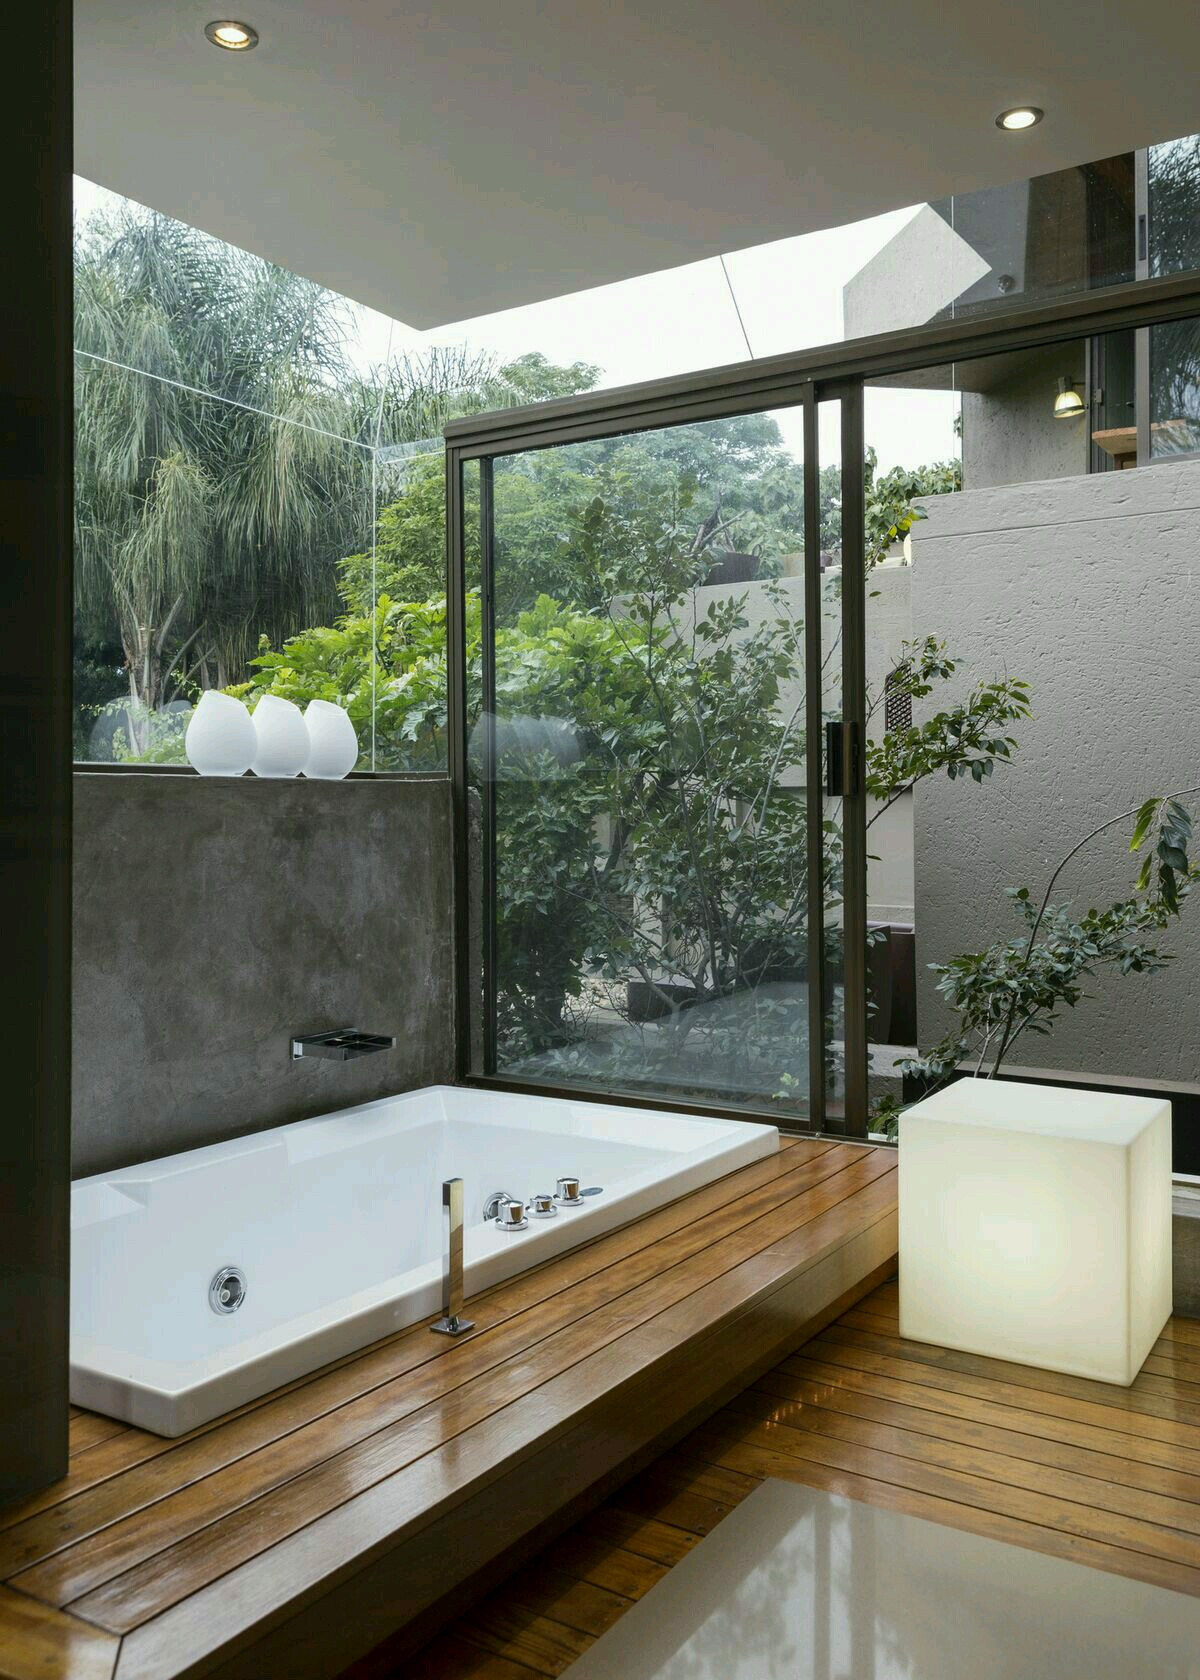 Bathroom Decor Inspiration
 20 Amazing Open Bathroom Design Inspiration The